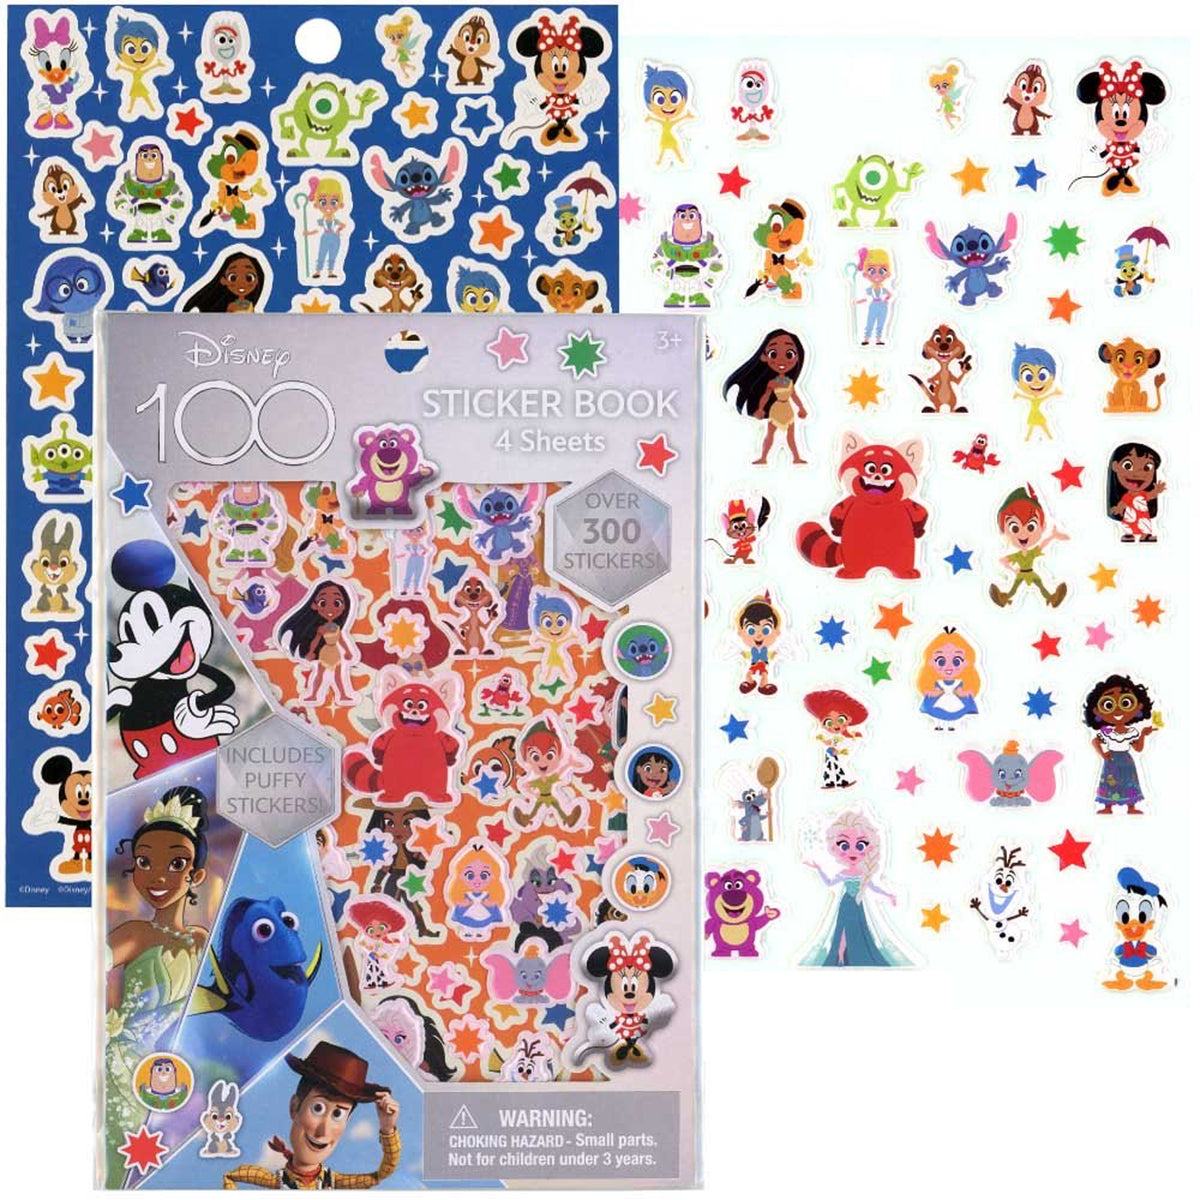 Disney 100 Sticker Sheet - 300+ Stickers